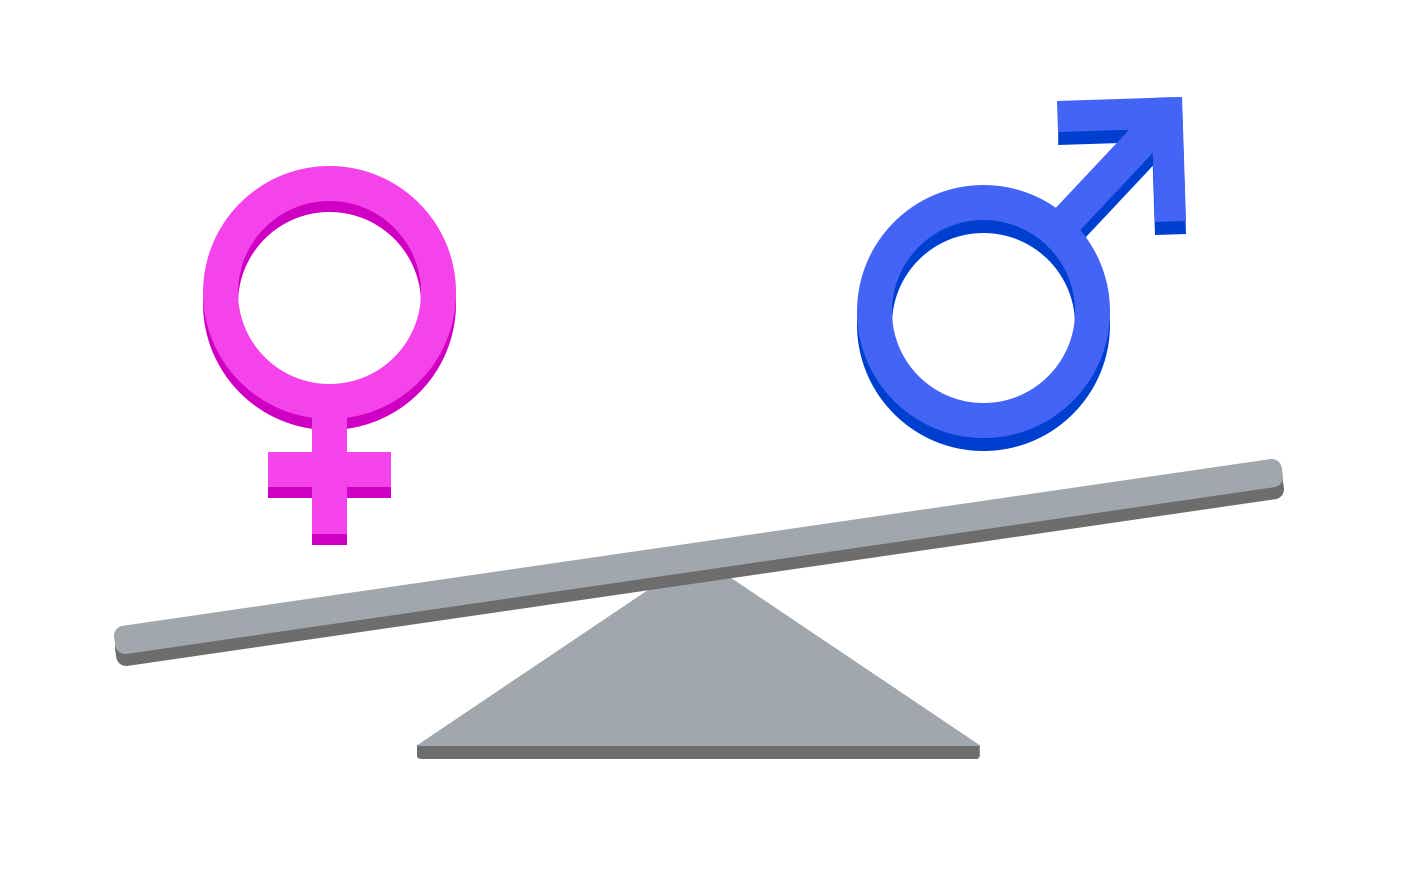 Gender symbols on a scale